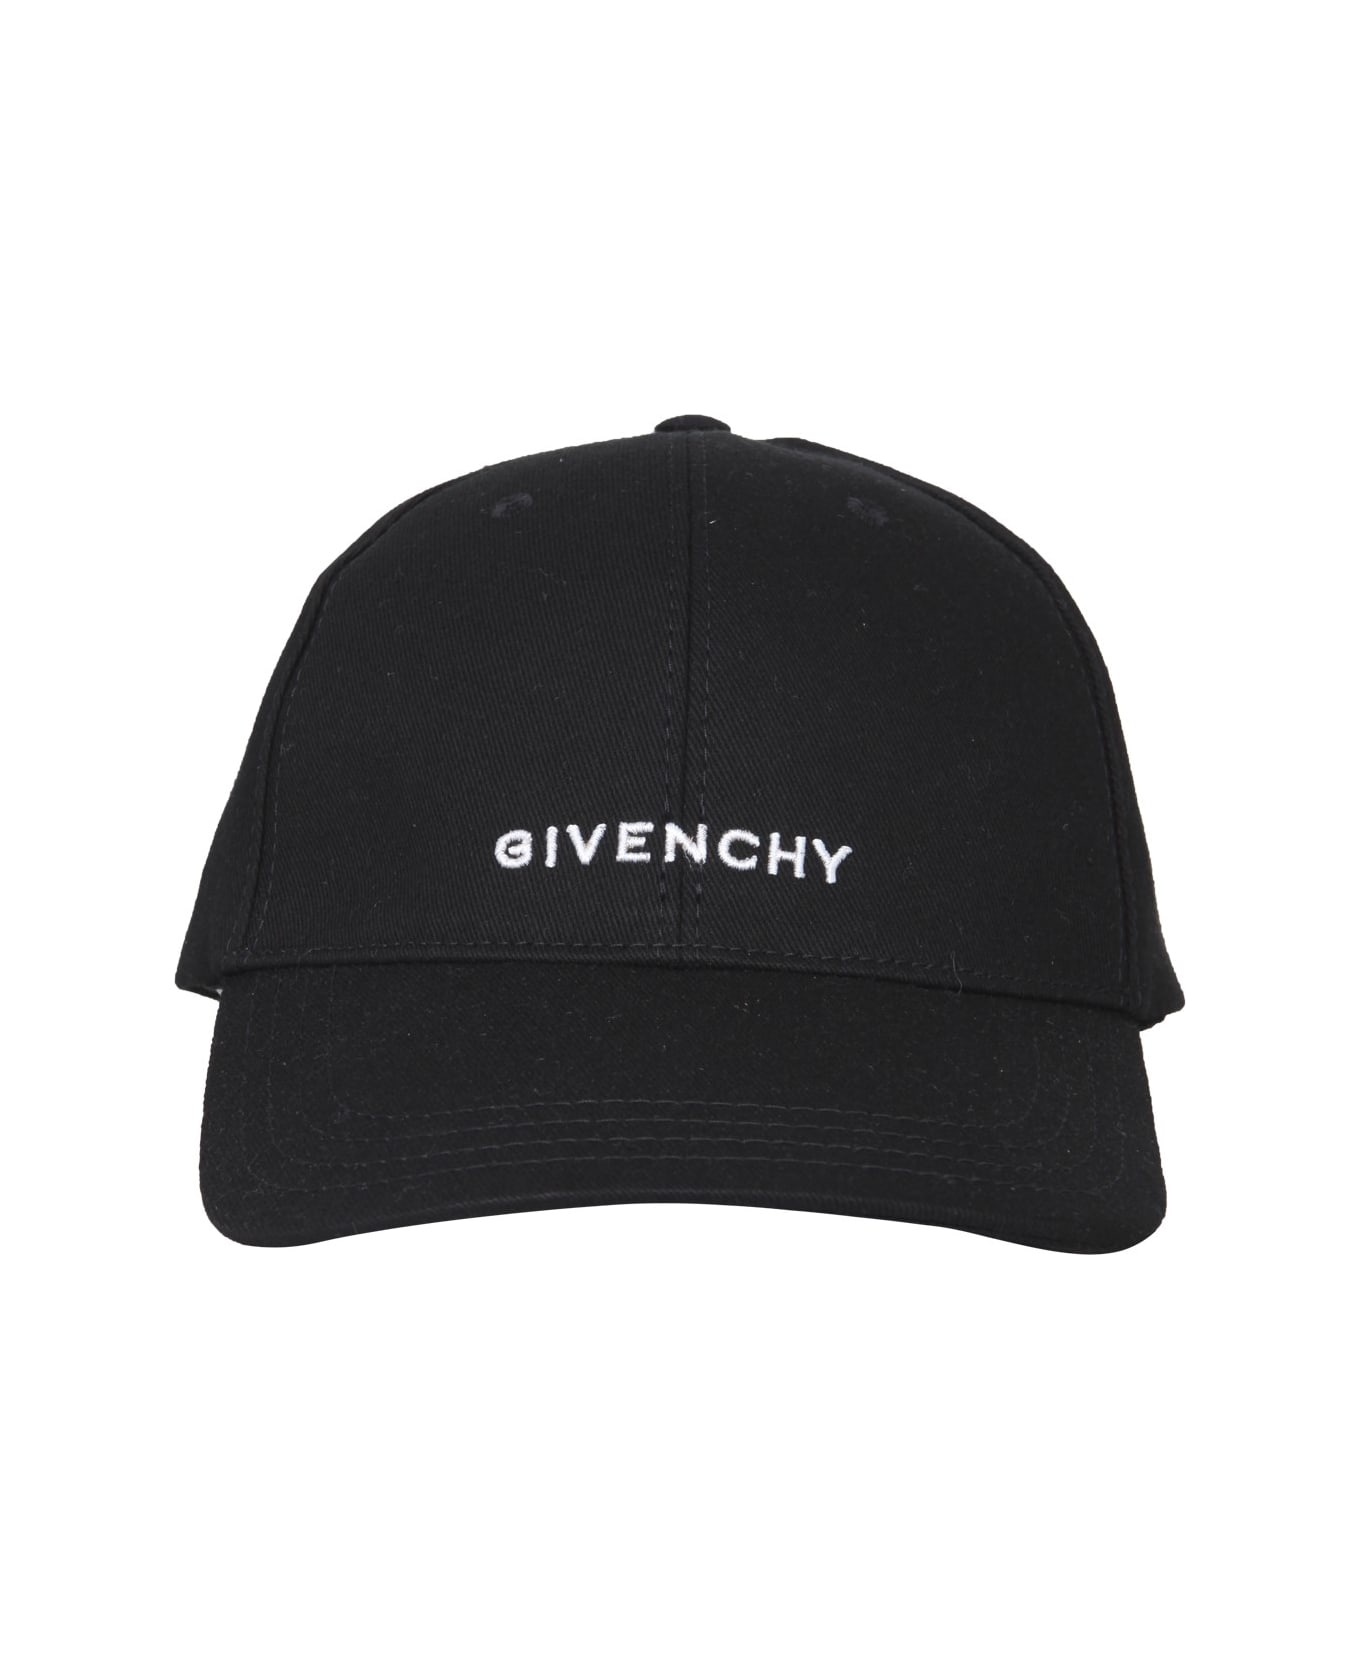 Givenchy 4g Hat - Black